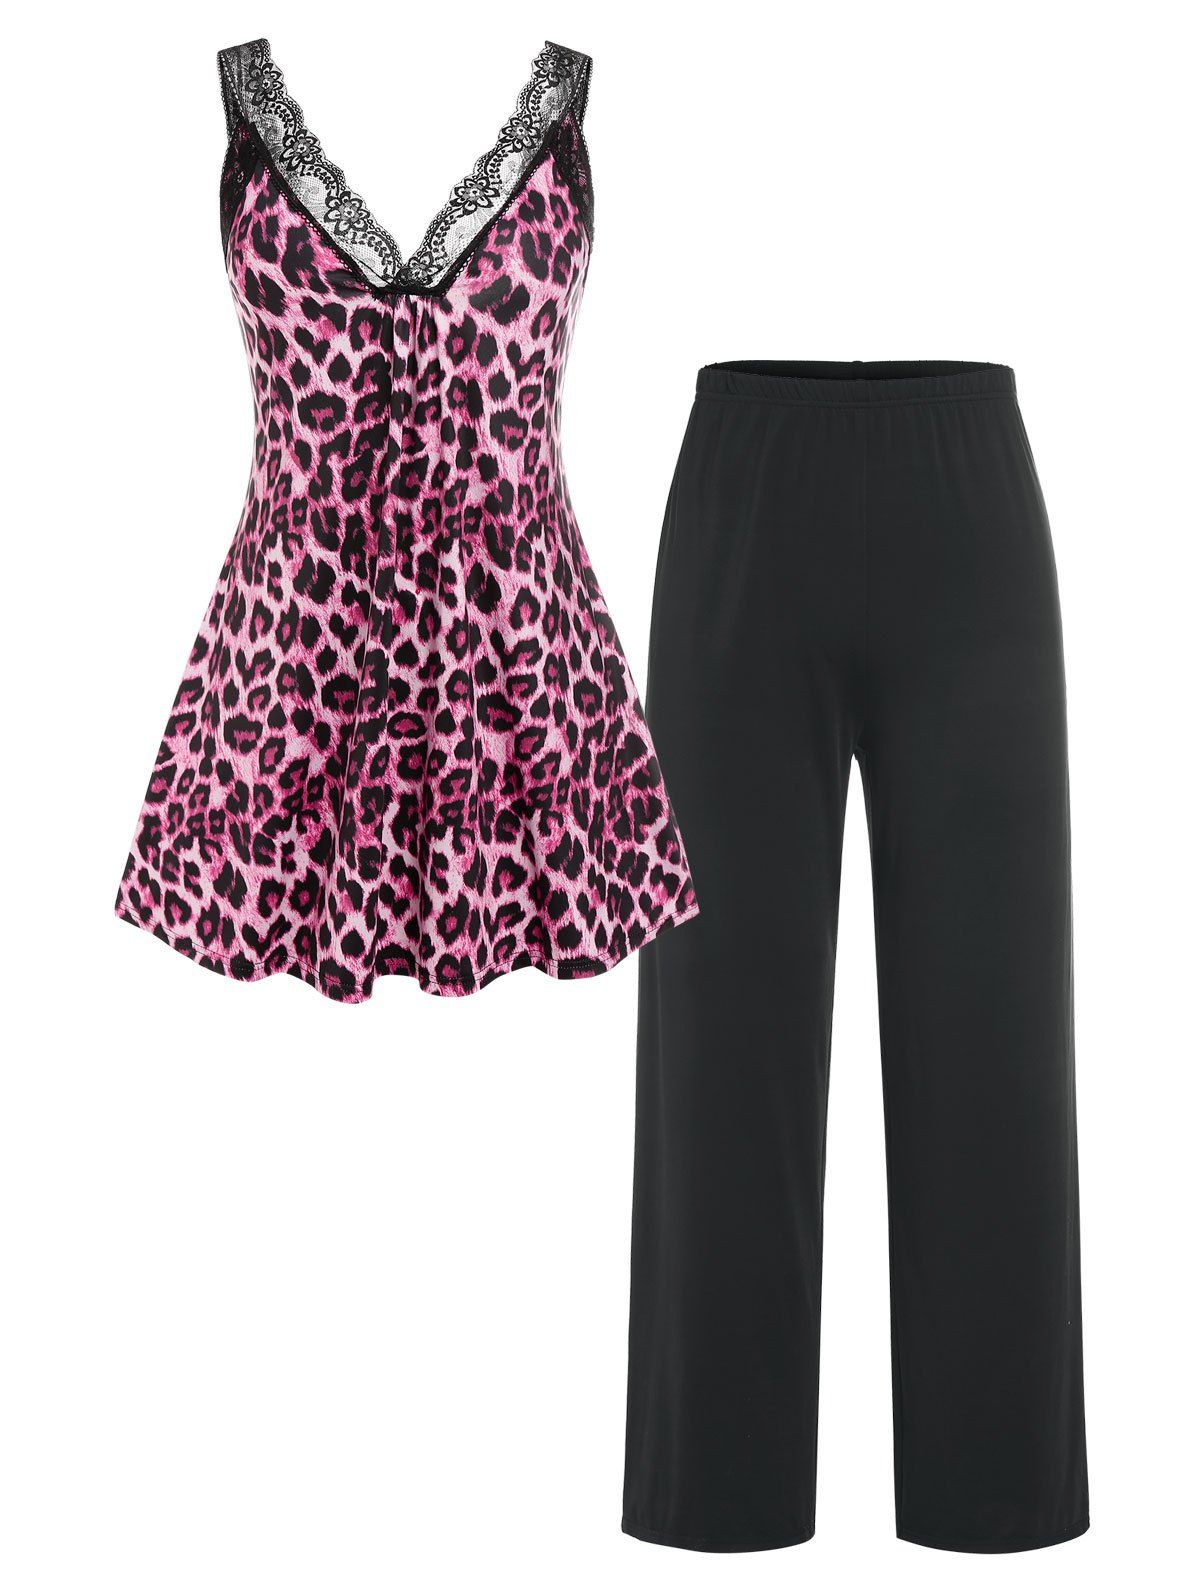 Plus Size Leopard Print Tank Top and Pants Pajamas Set - LIGHT PINK L